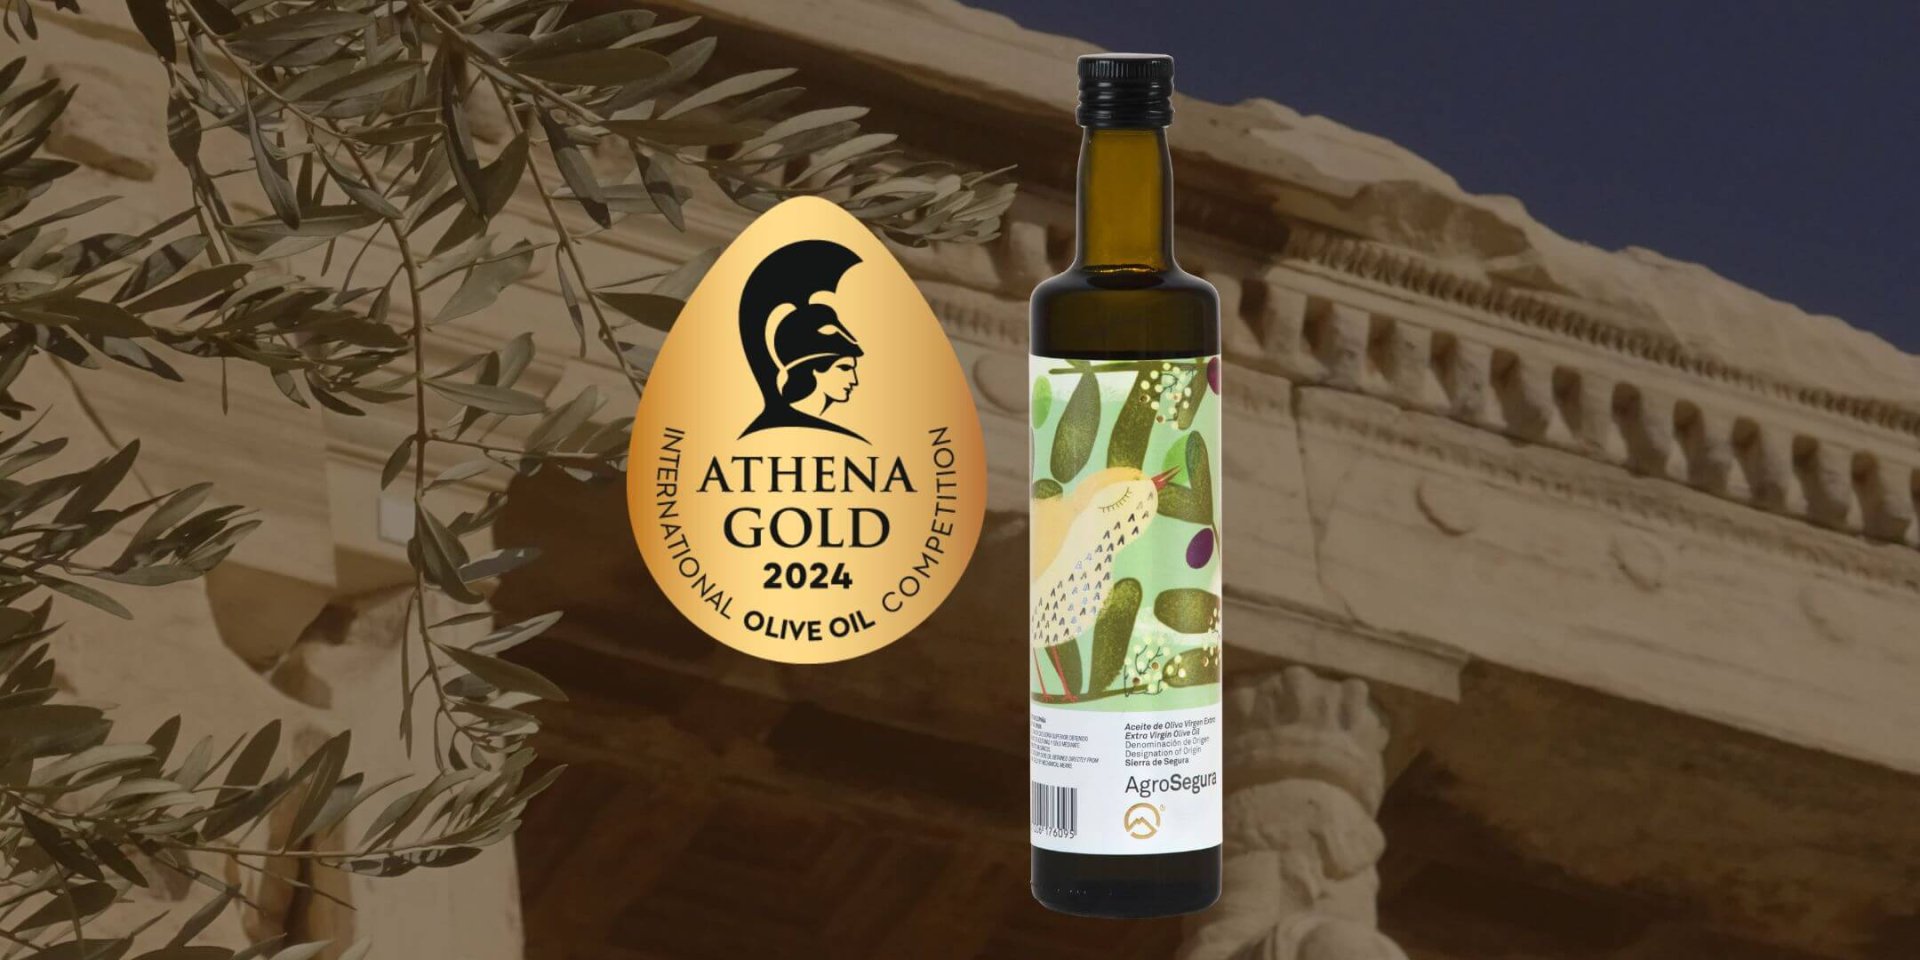 Aceites Agrosegura, Medalla de Oro en Athenas IOOC 2024